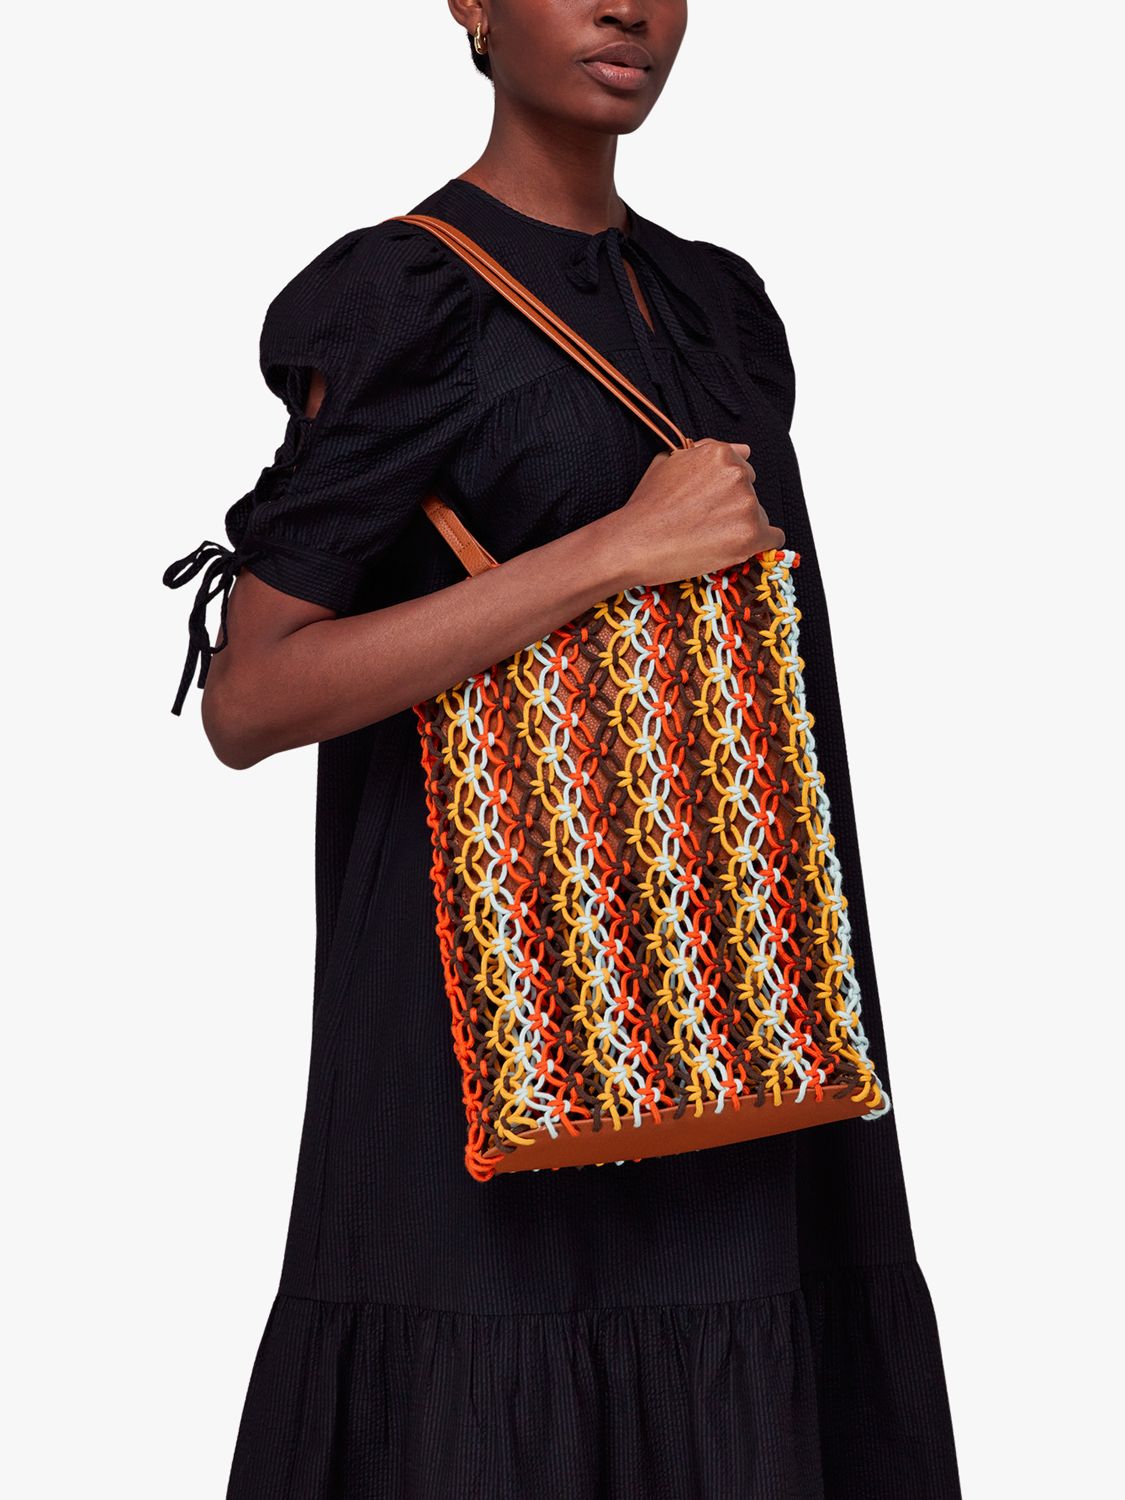 Whistles Chaya Striped Shopper Bag, Multi, One Size